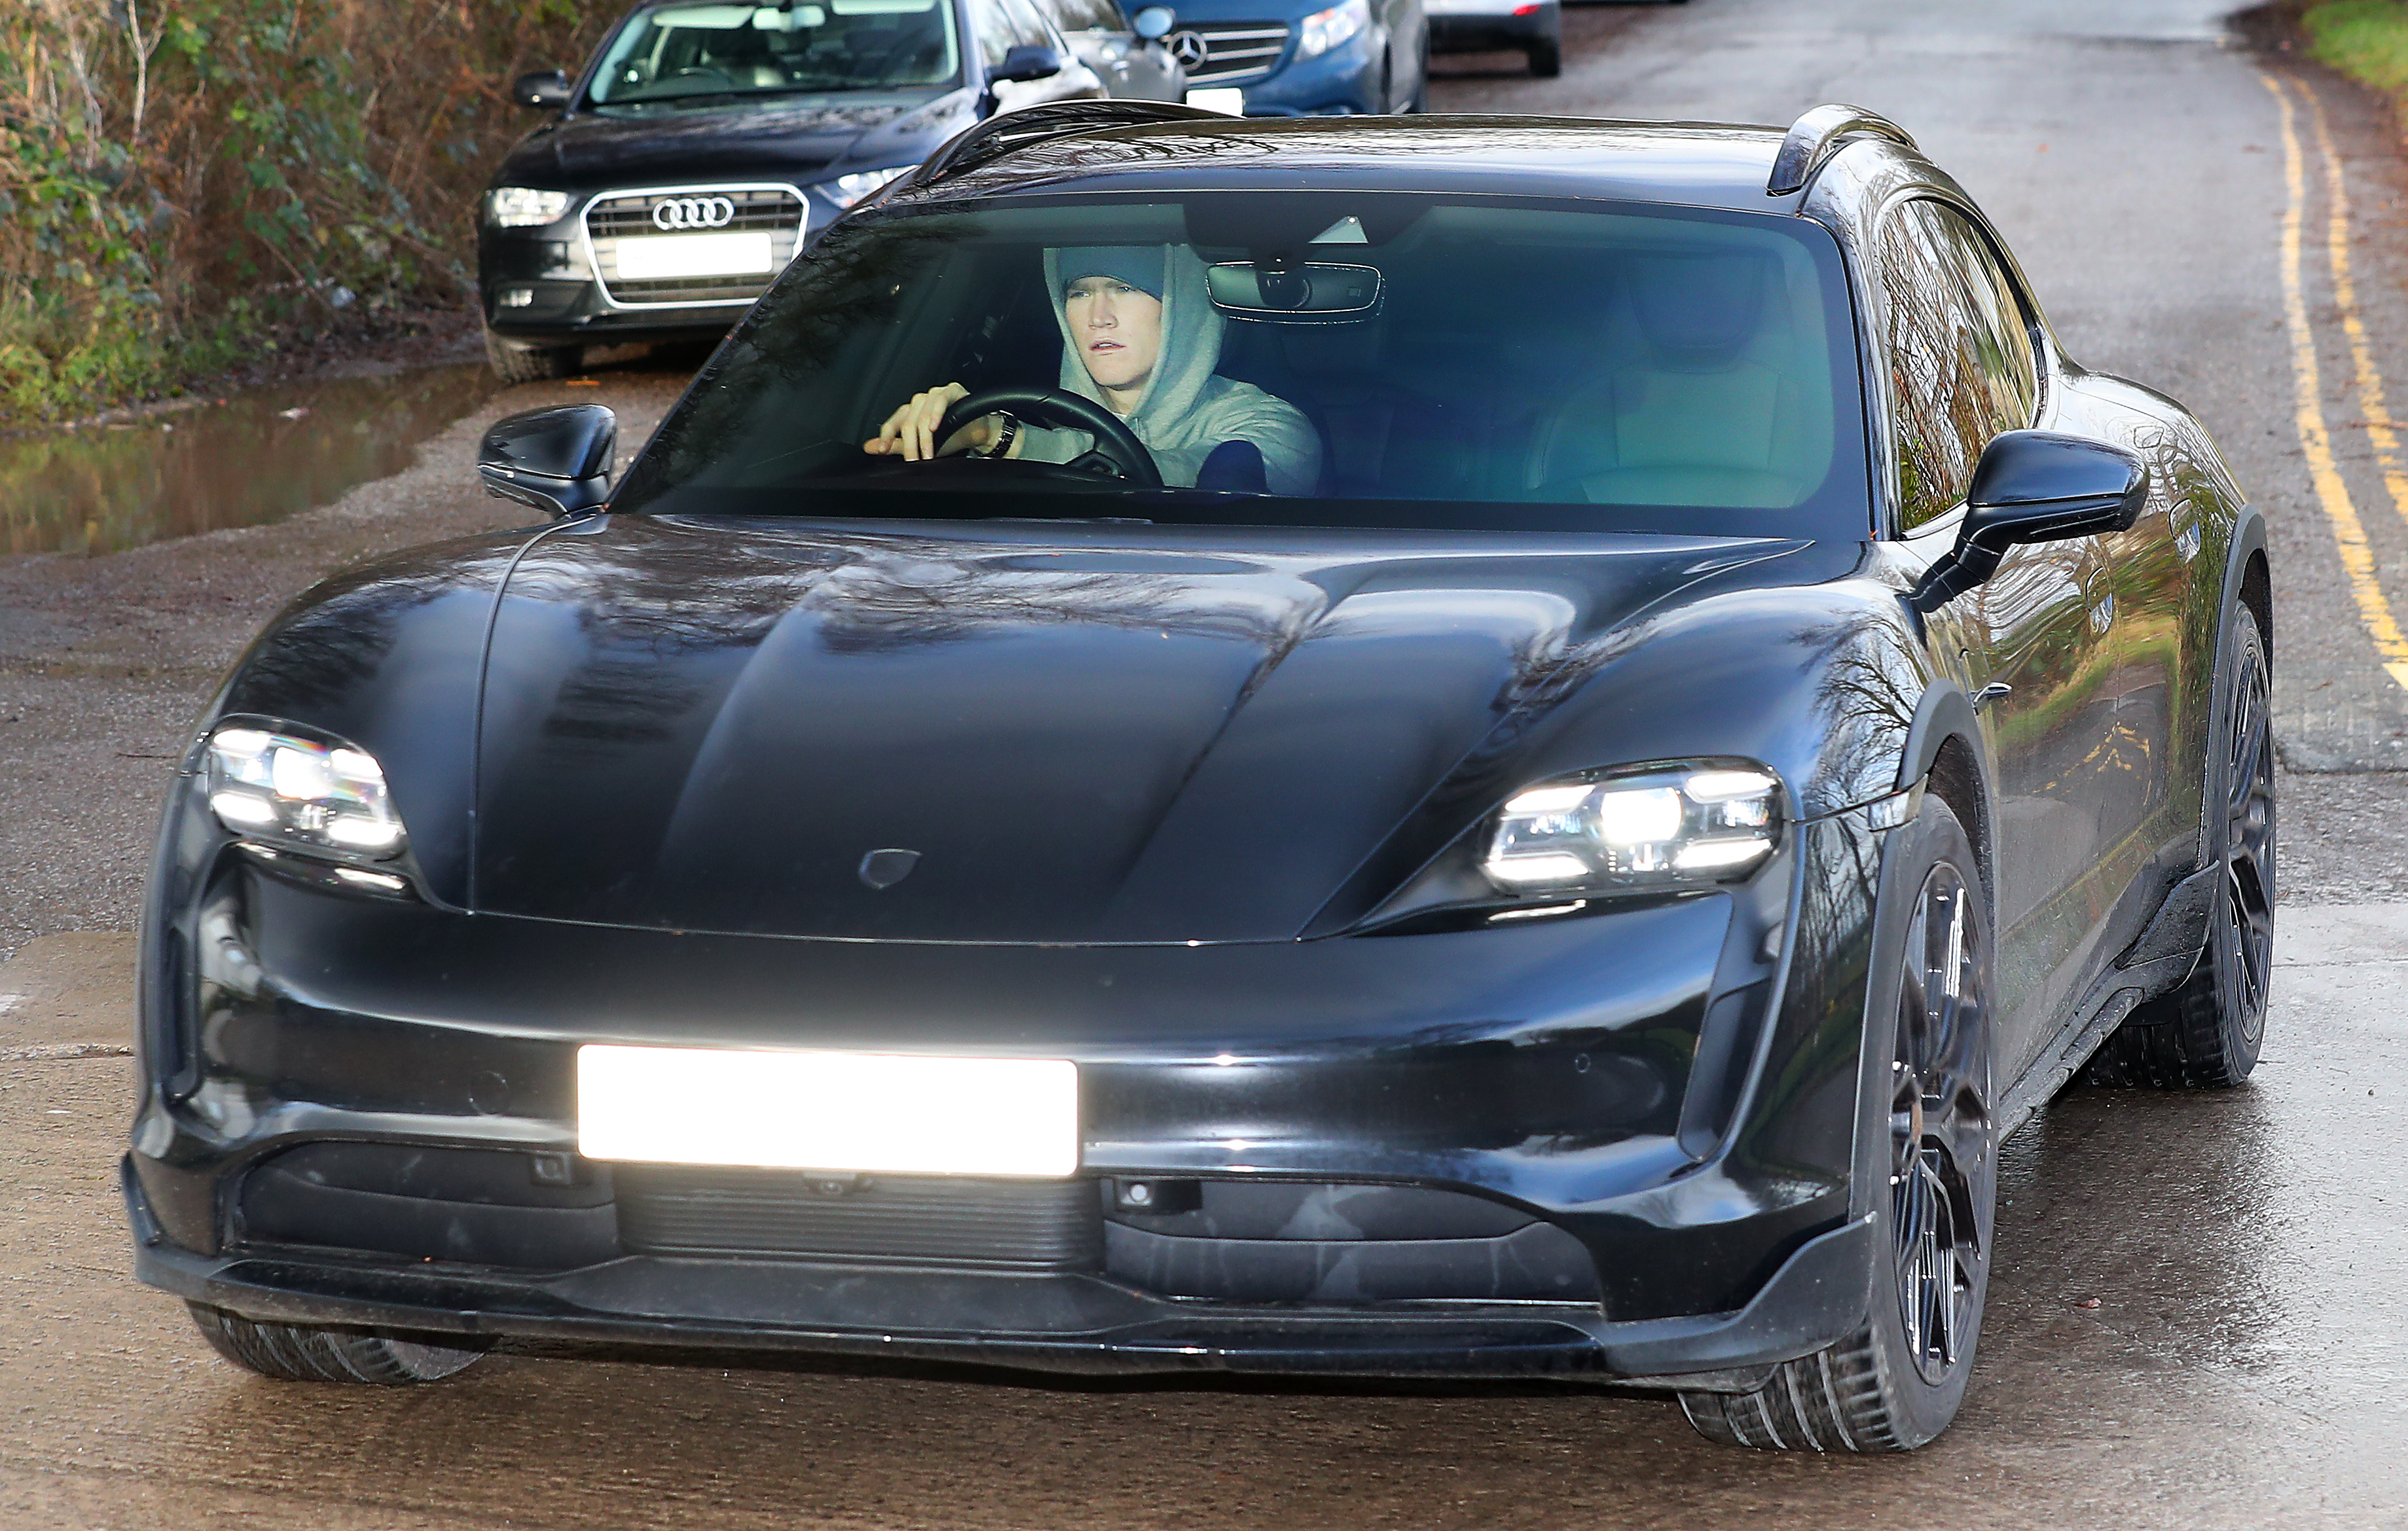 Man Utd stars arrive at training in new cars including £250,000 Rolls Royce and Lamborghini Aventador worth £337,000